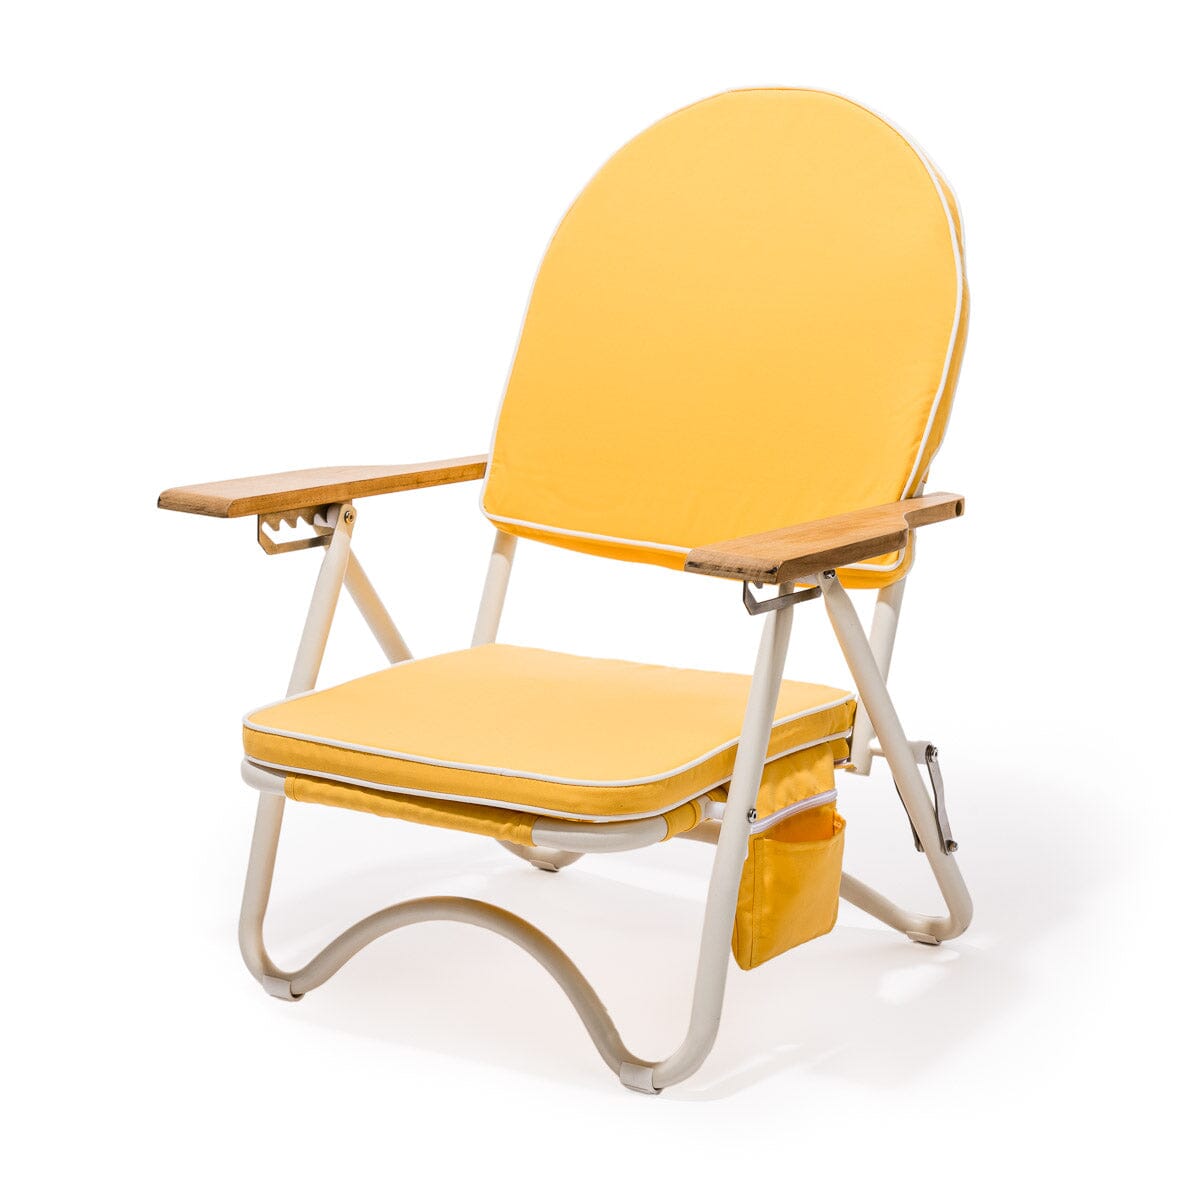 The Pam Chair - Rivie Mimosa Pam Chair Business & Pleasure Co Aus 